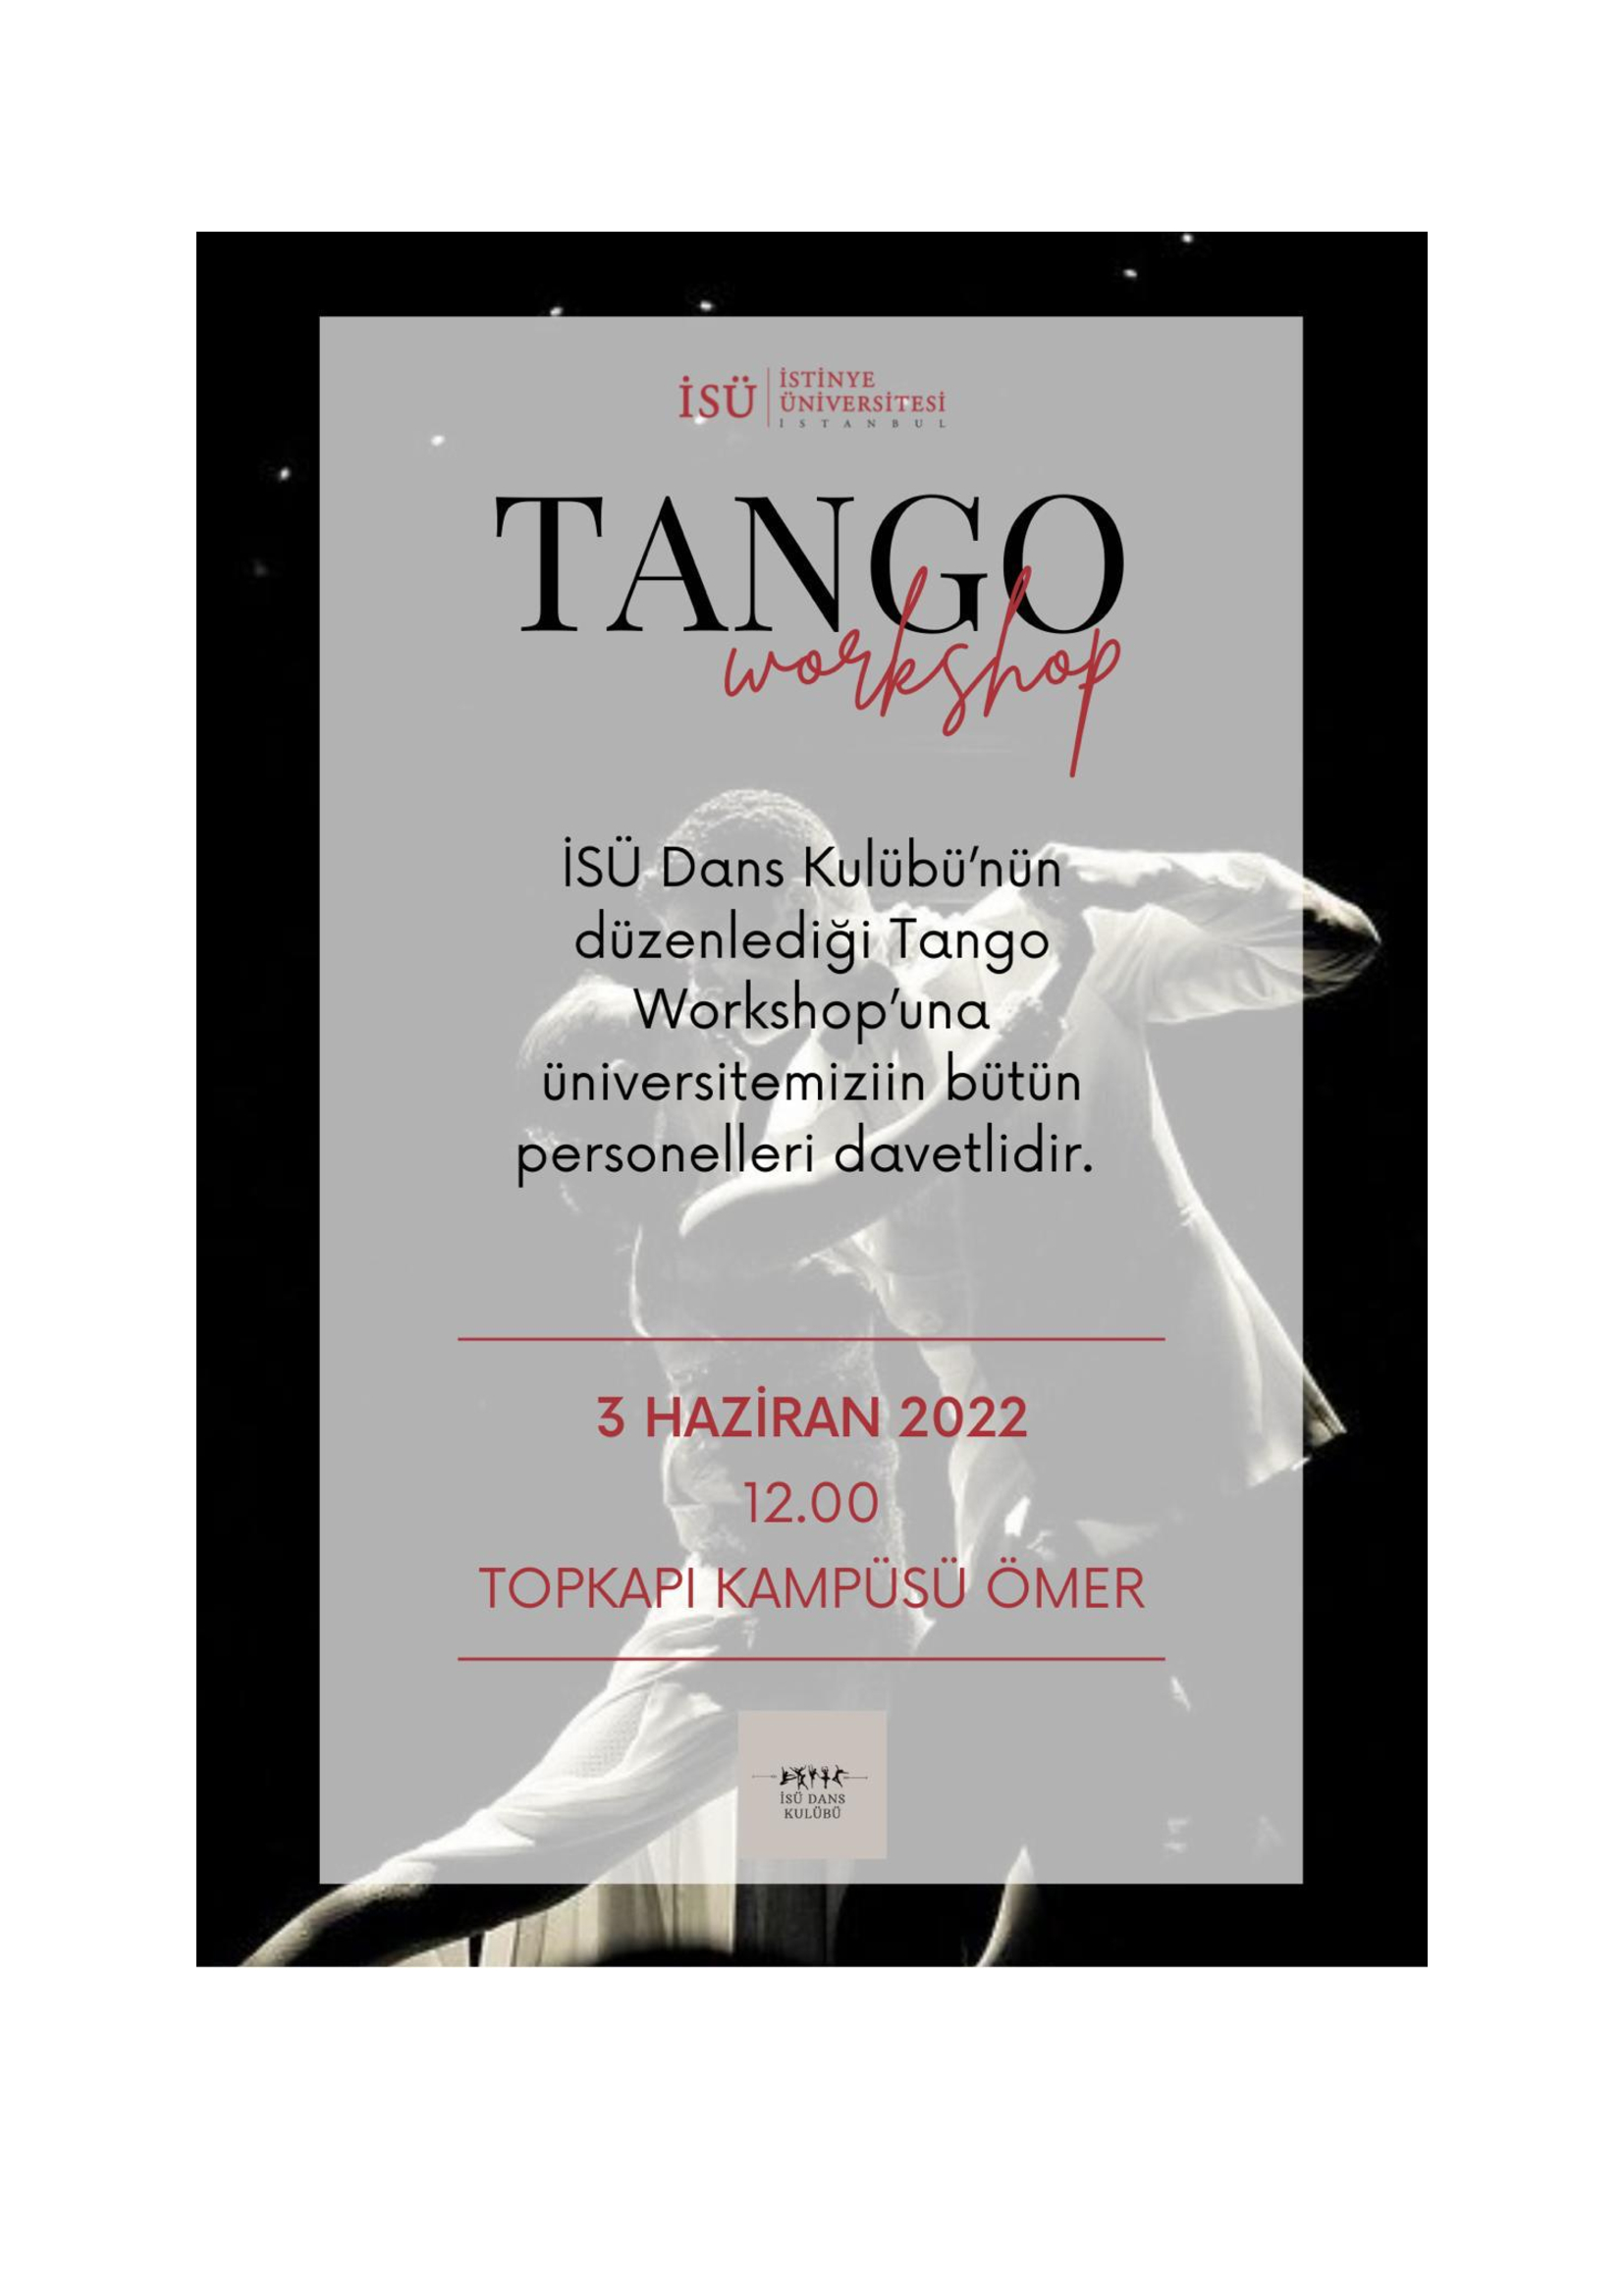 TANGO WORSHOP